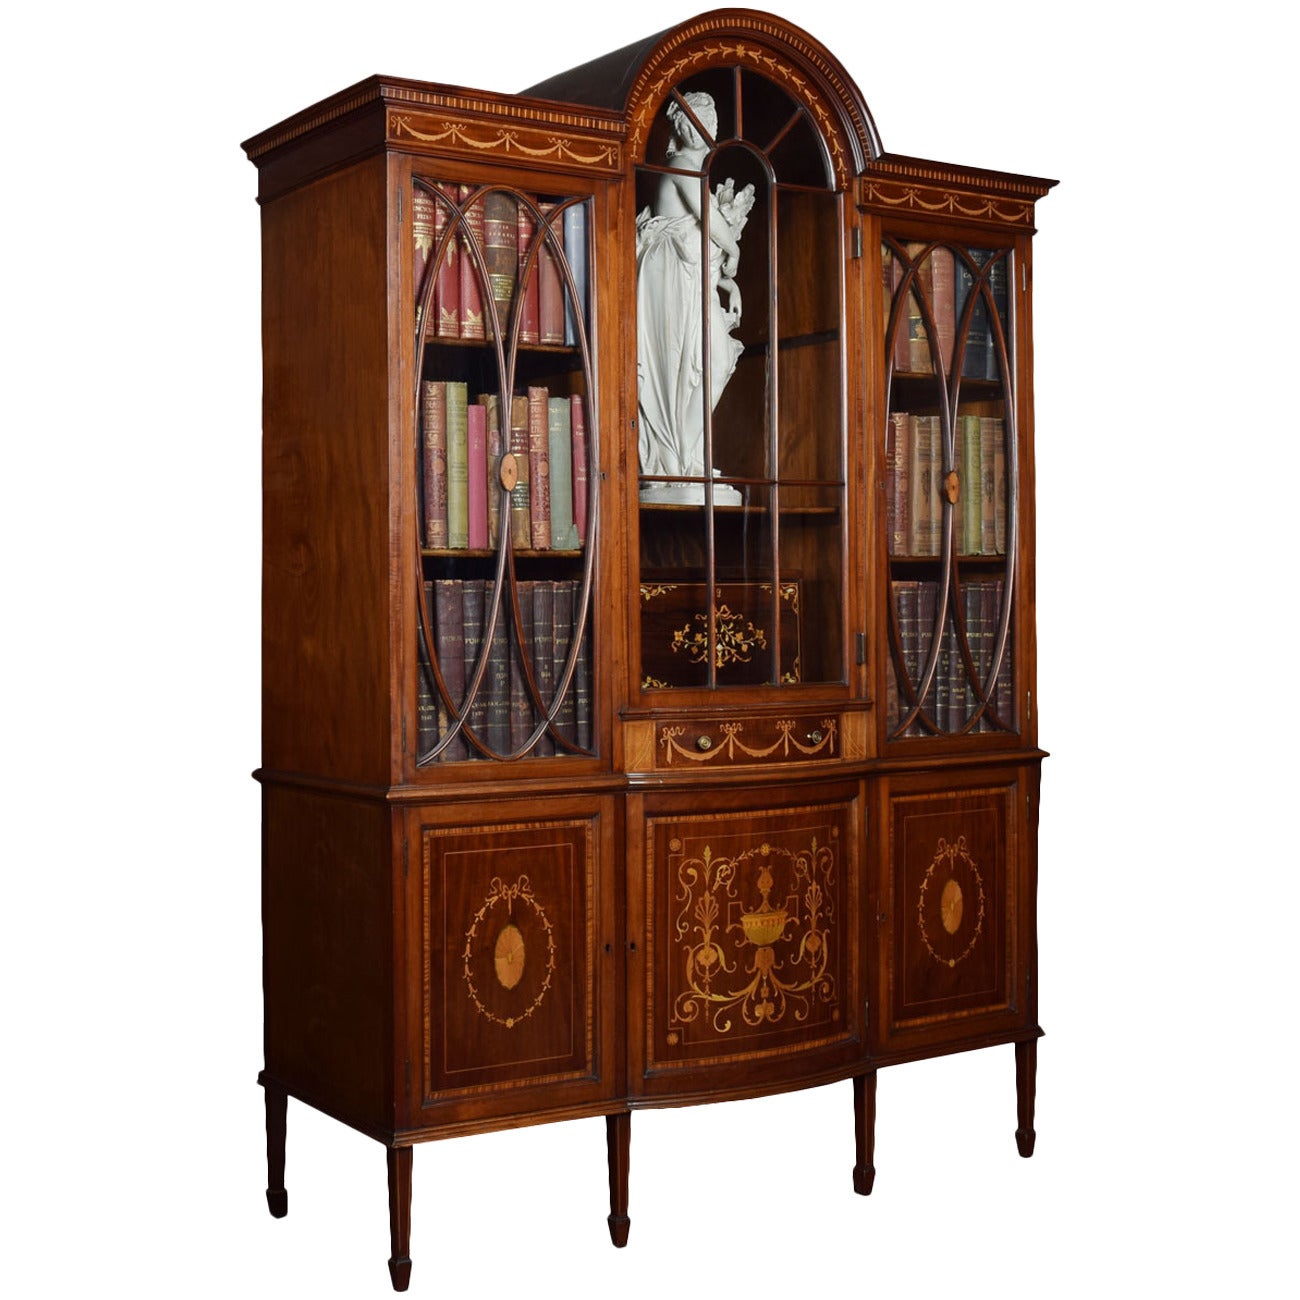 Late 19th Century Sheraton Revival Mahogany Inlaid Display Cabinet Bookcase